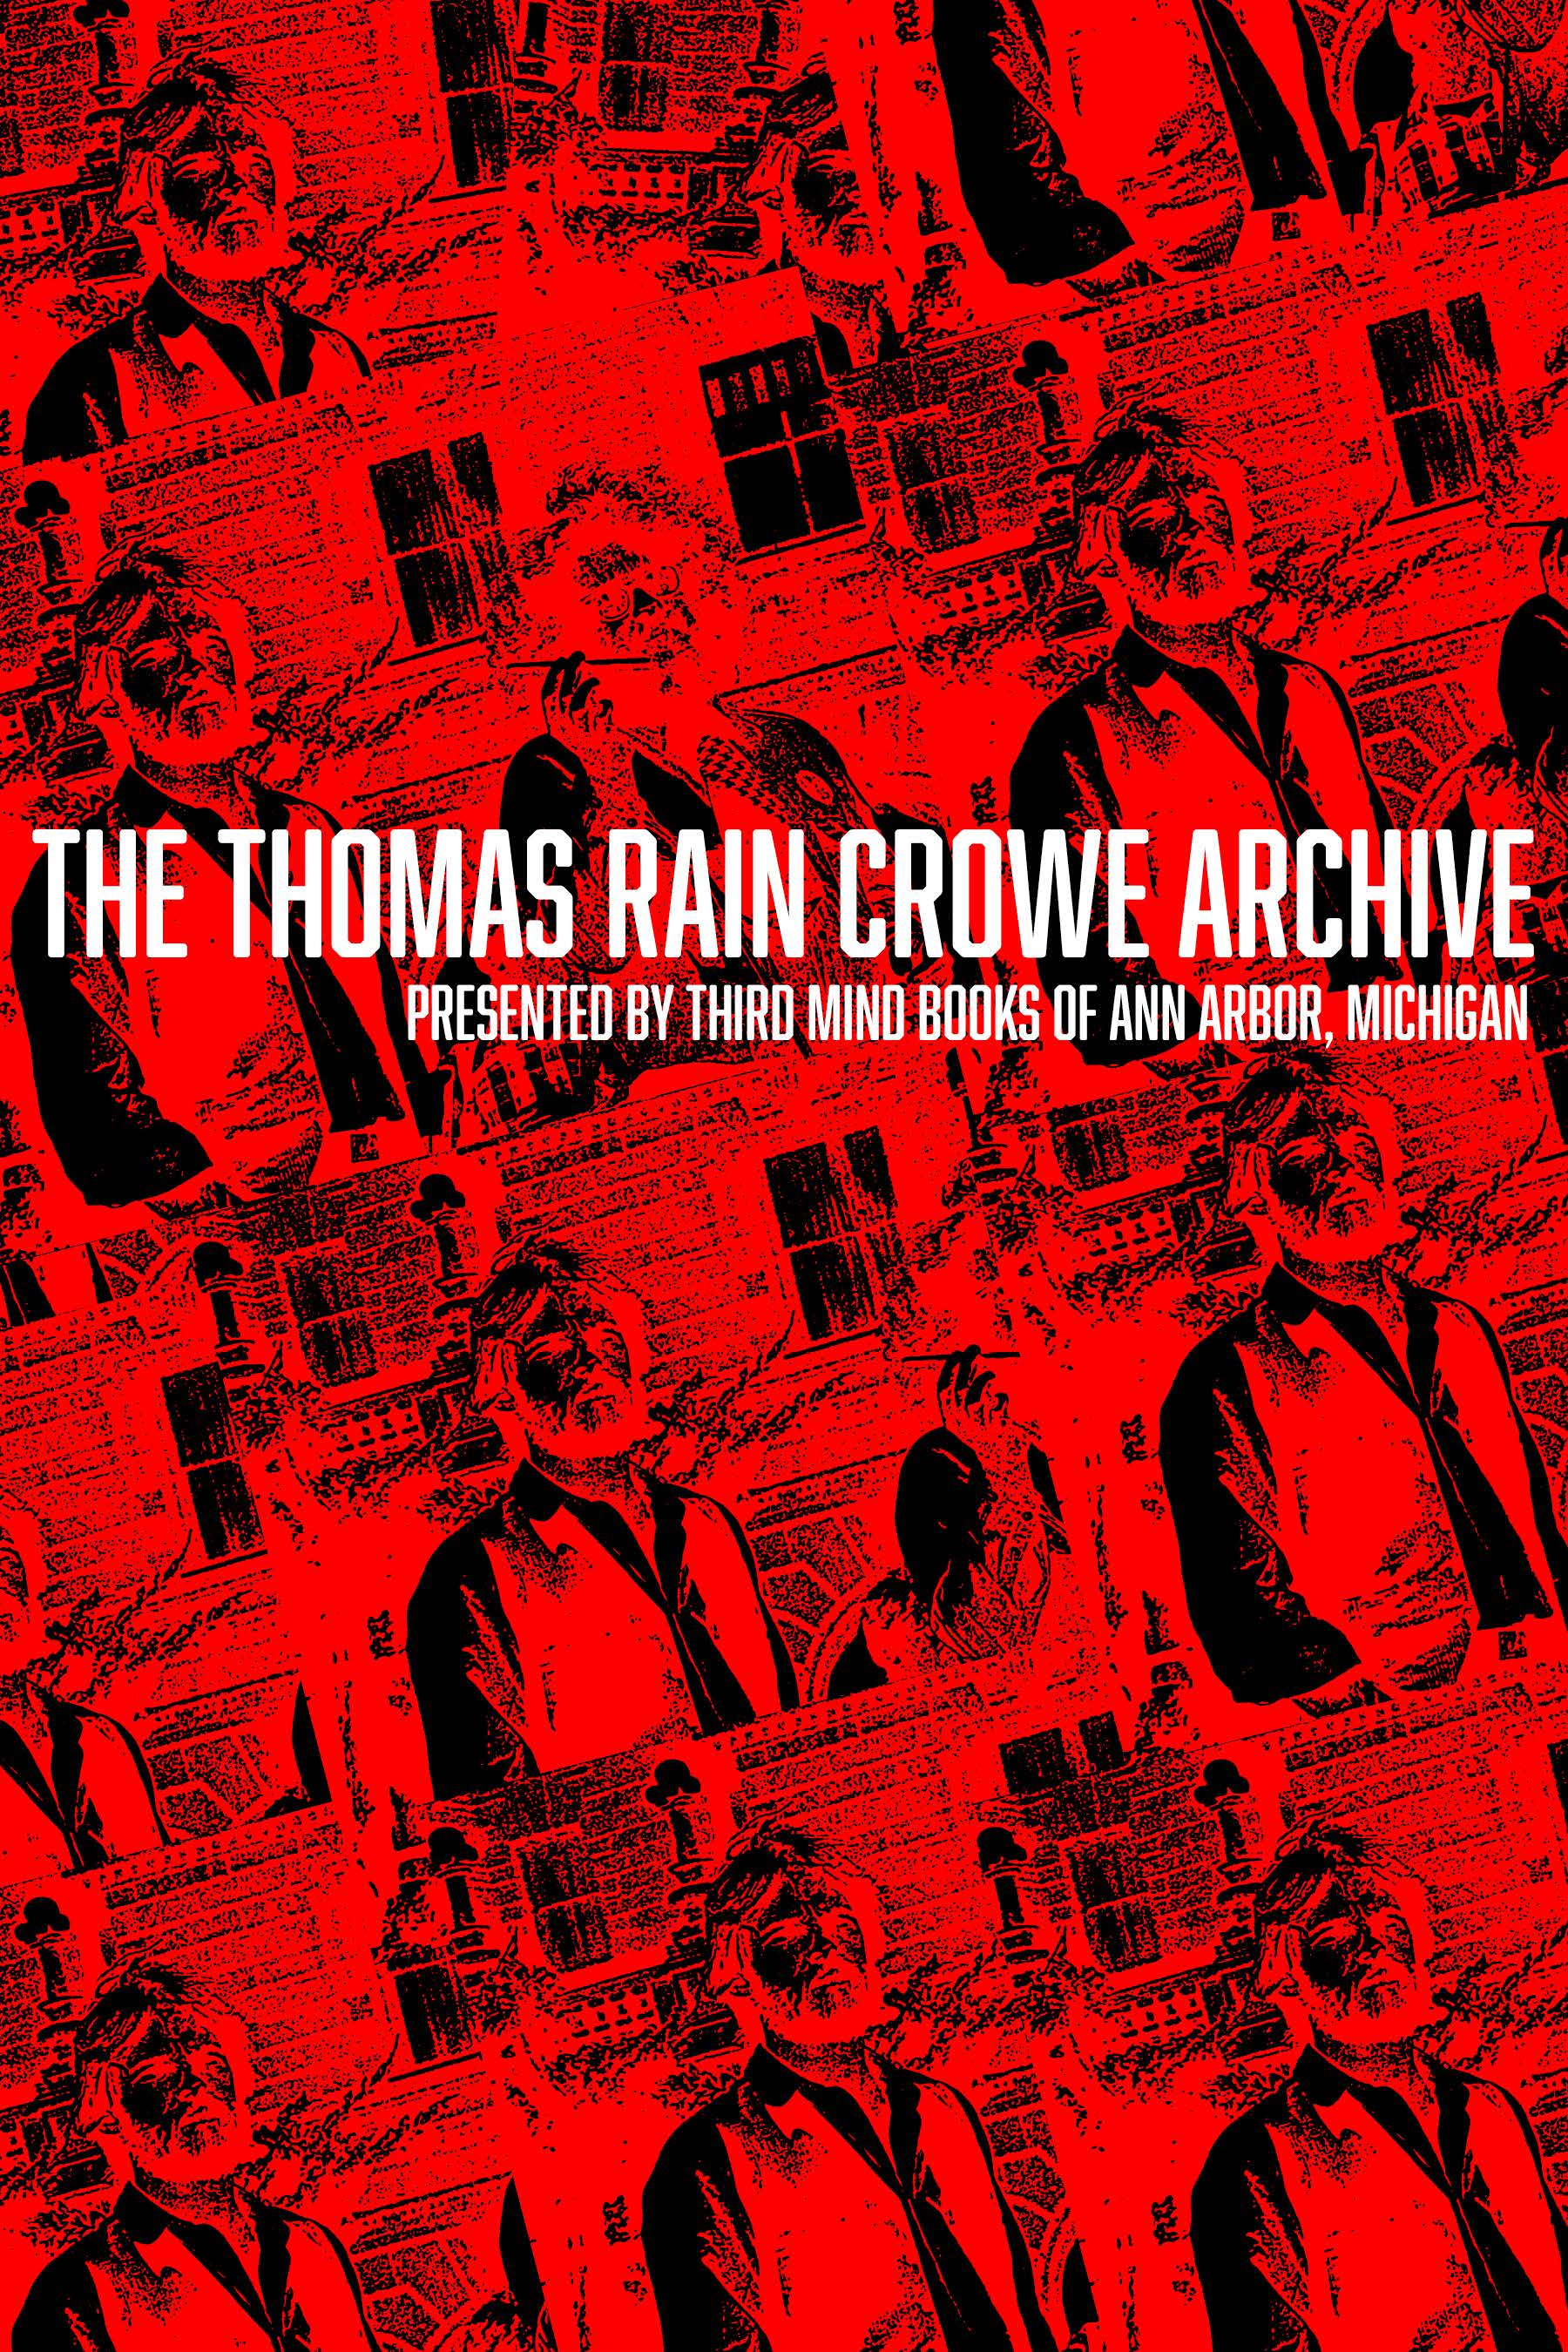 The Thomas Rain Crowe Archive